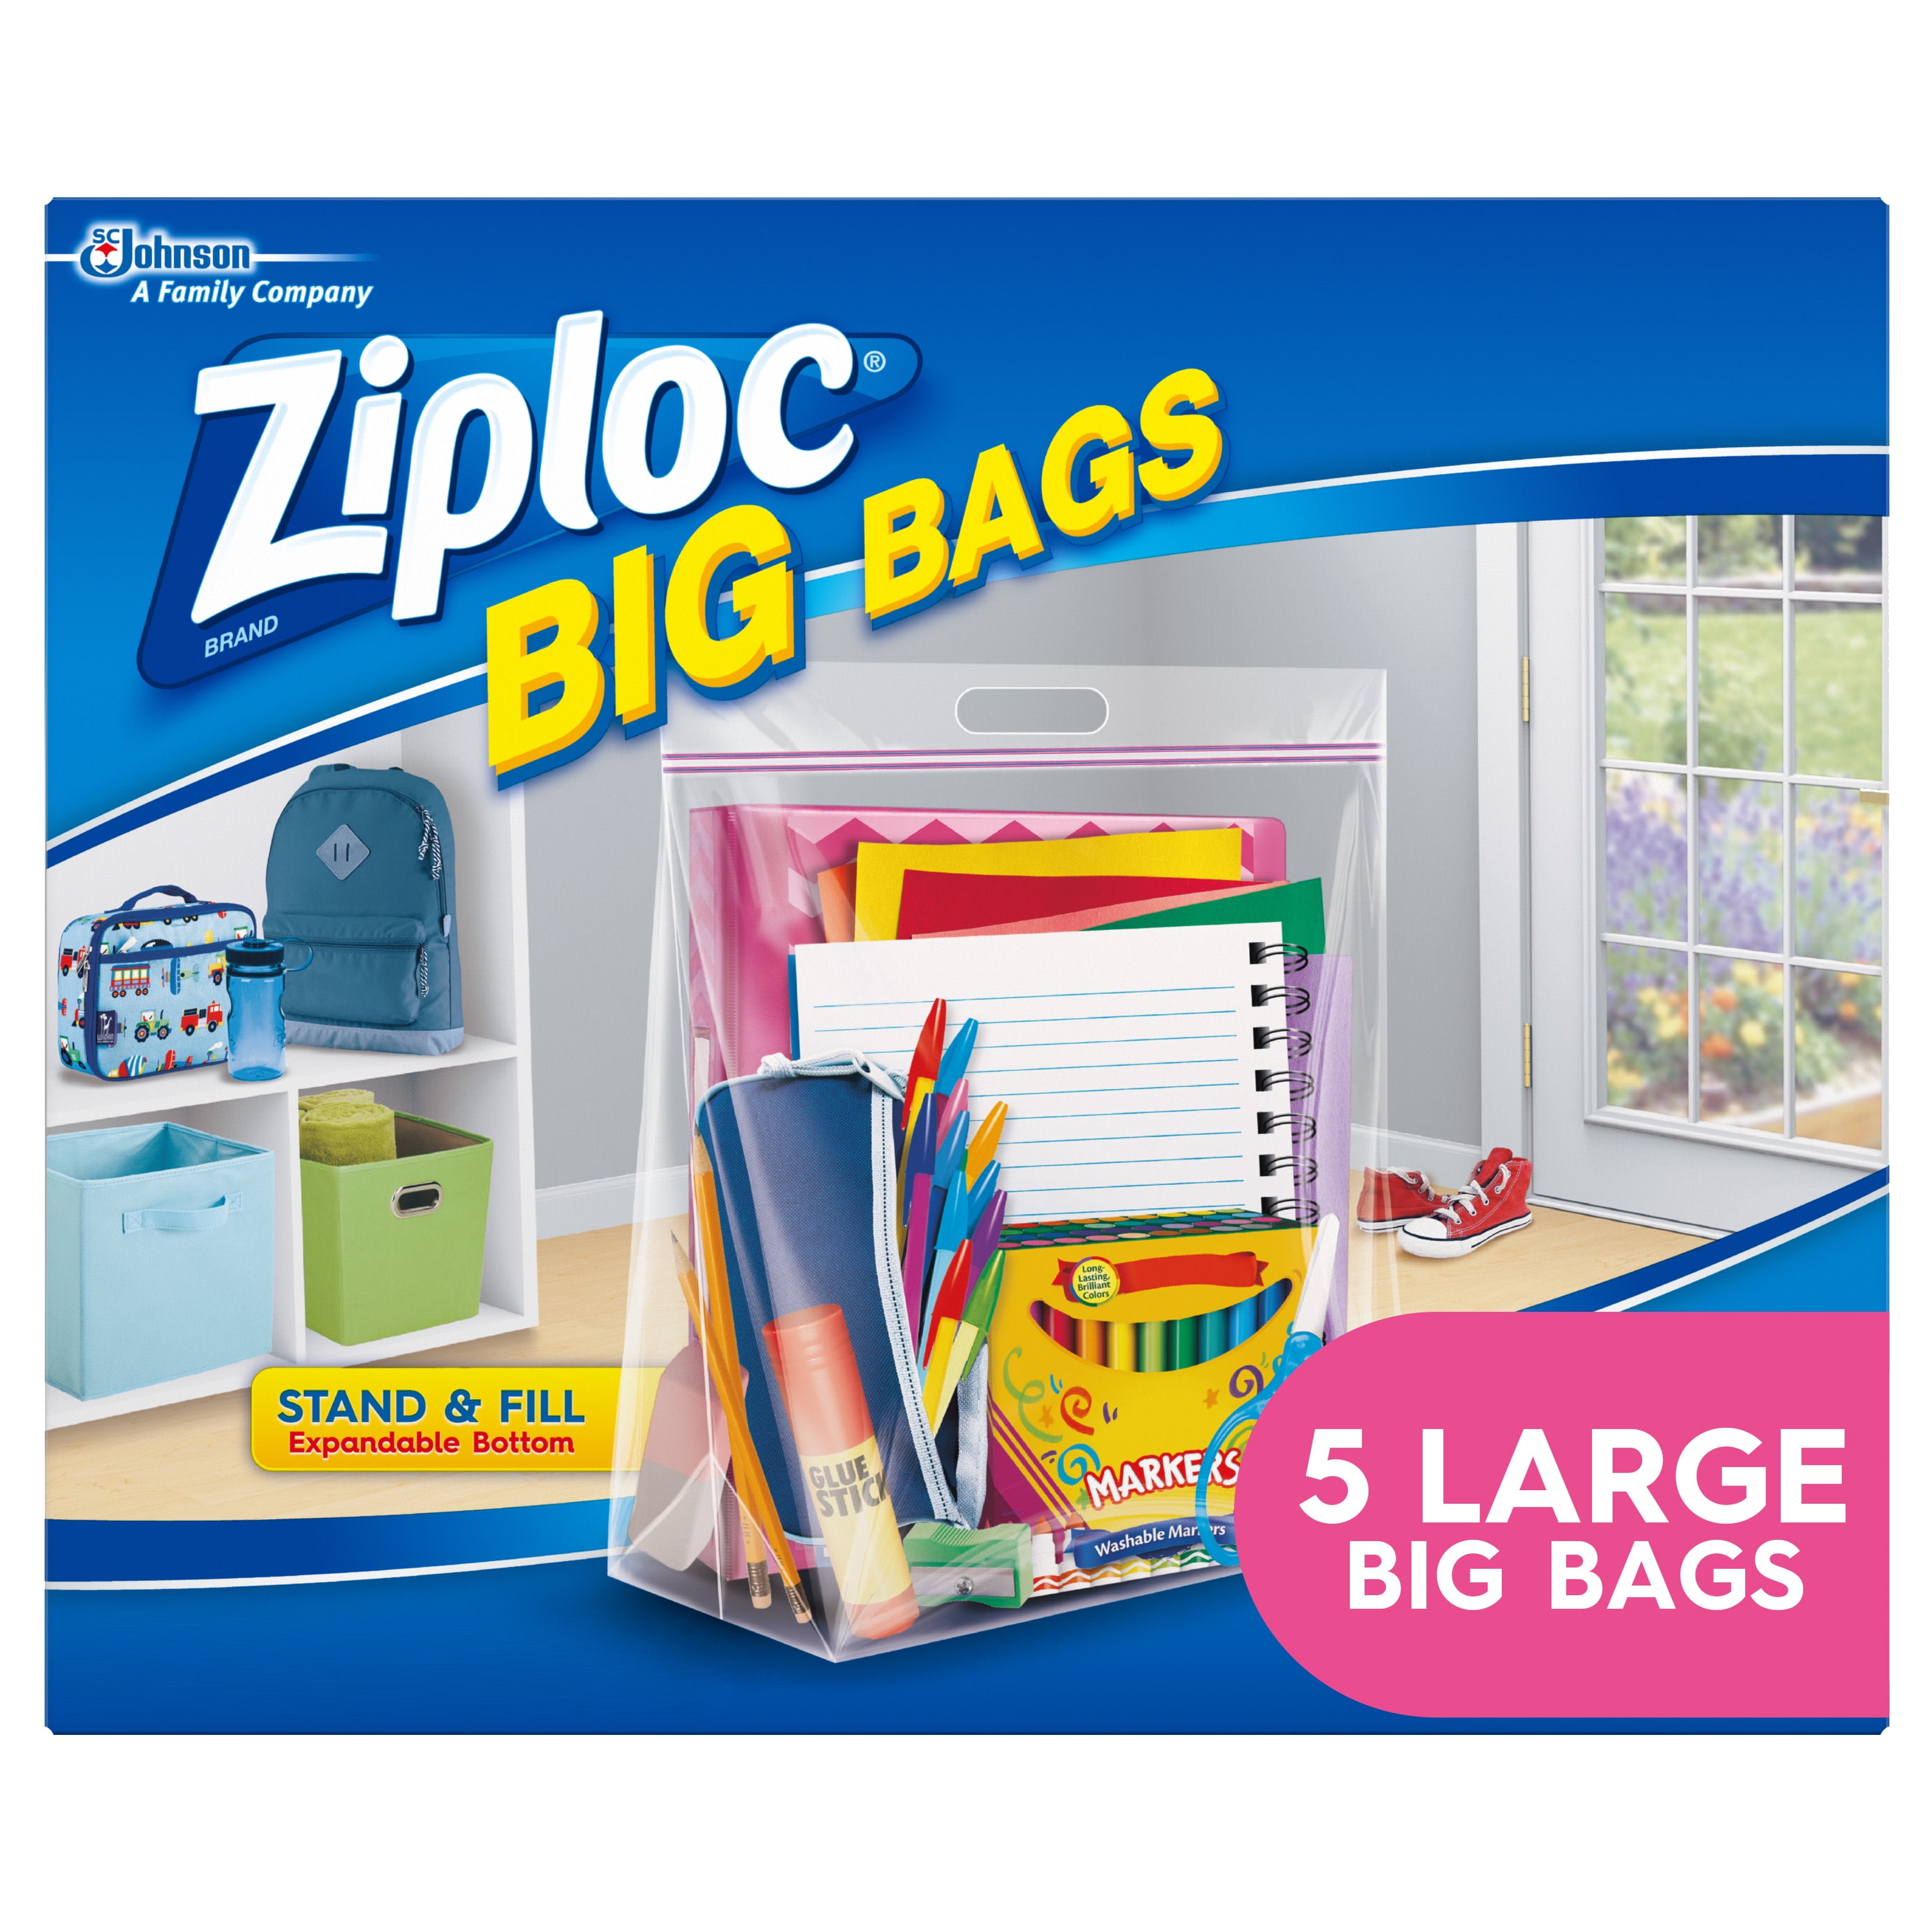 Ziploc Big Bags w/ Double Zipper 20 Gallon Size XXL 3 ct & XL 4 Bags Value Pack